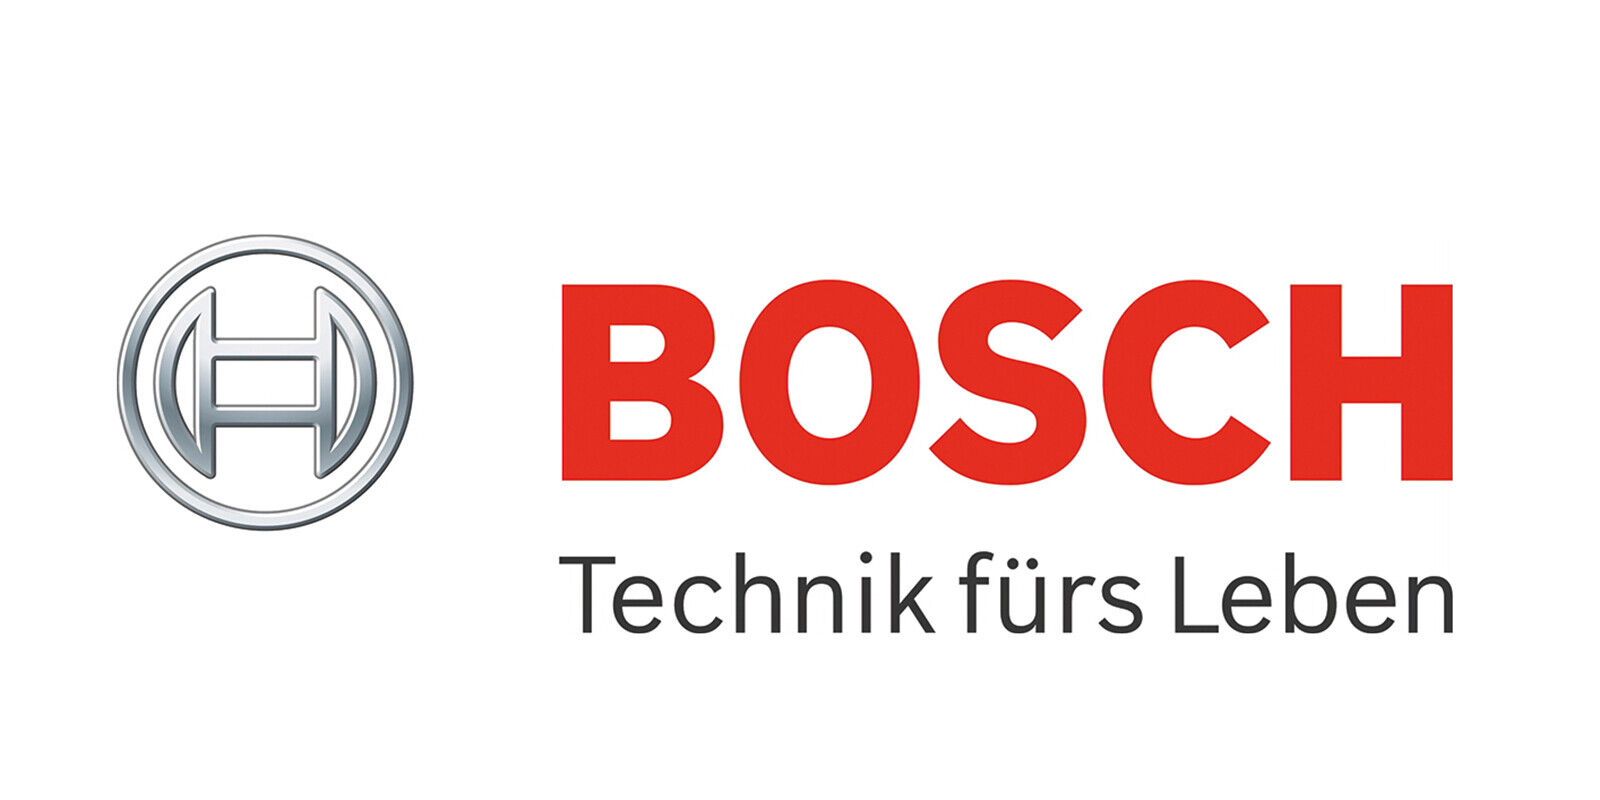  Bosch Brand Hintergrundbild 1600x800. BOSCH Handstaubsauger Staubsauger Kabellos Stielstaubsauger *B Ware Zustand:gut